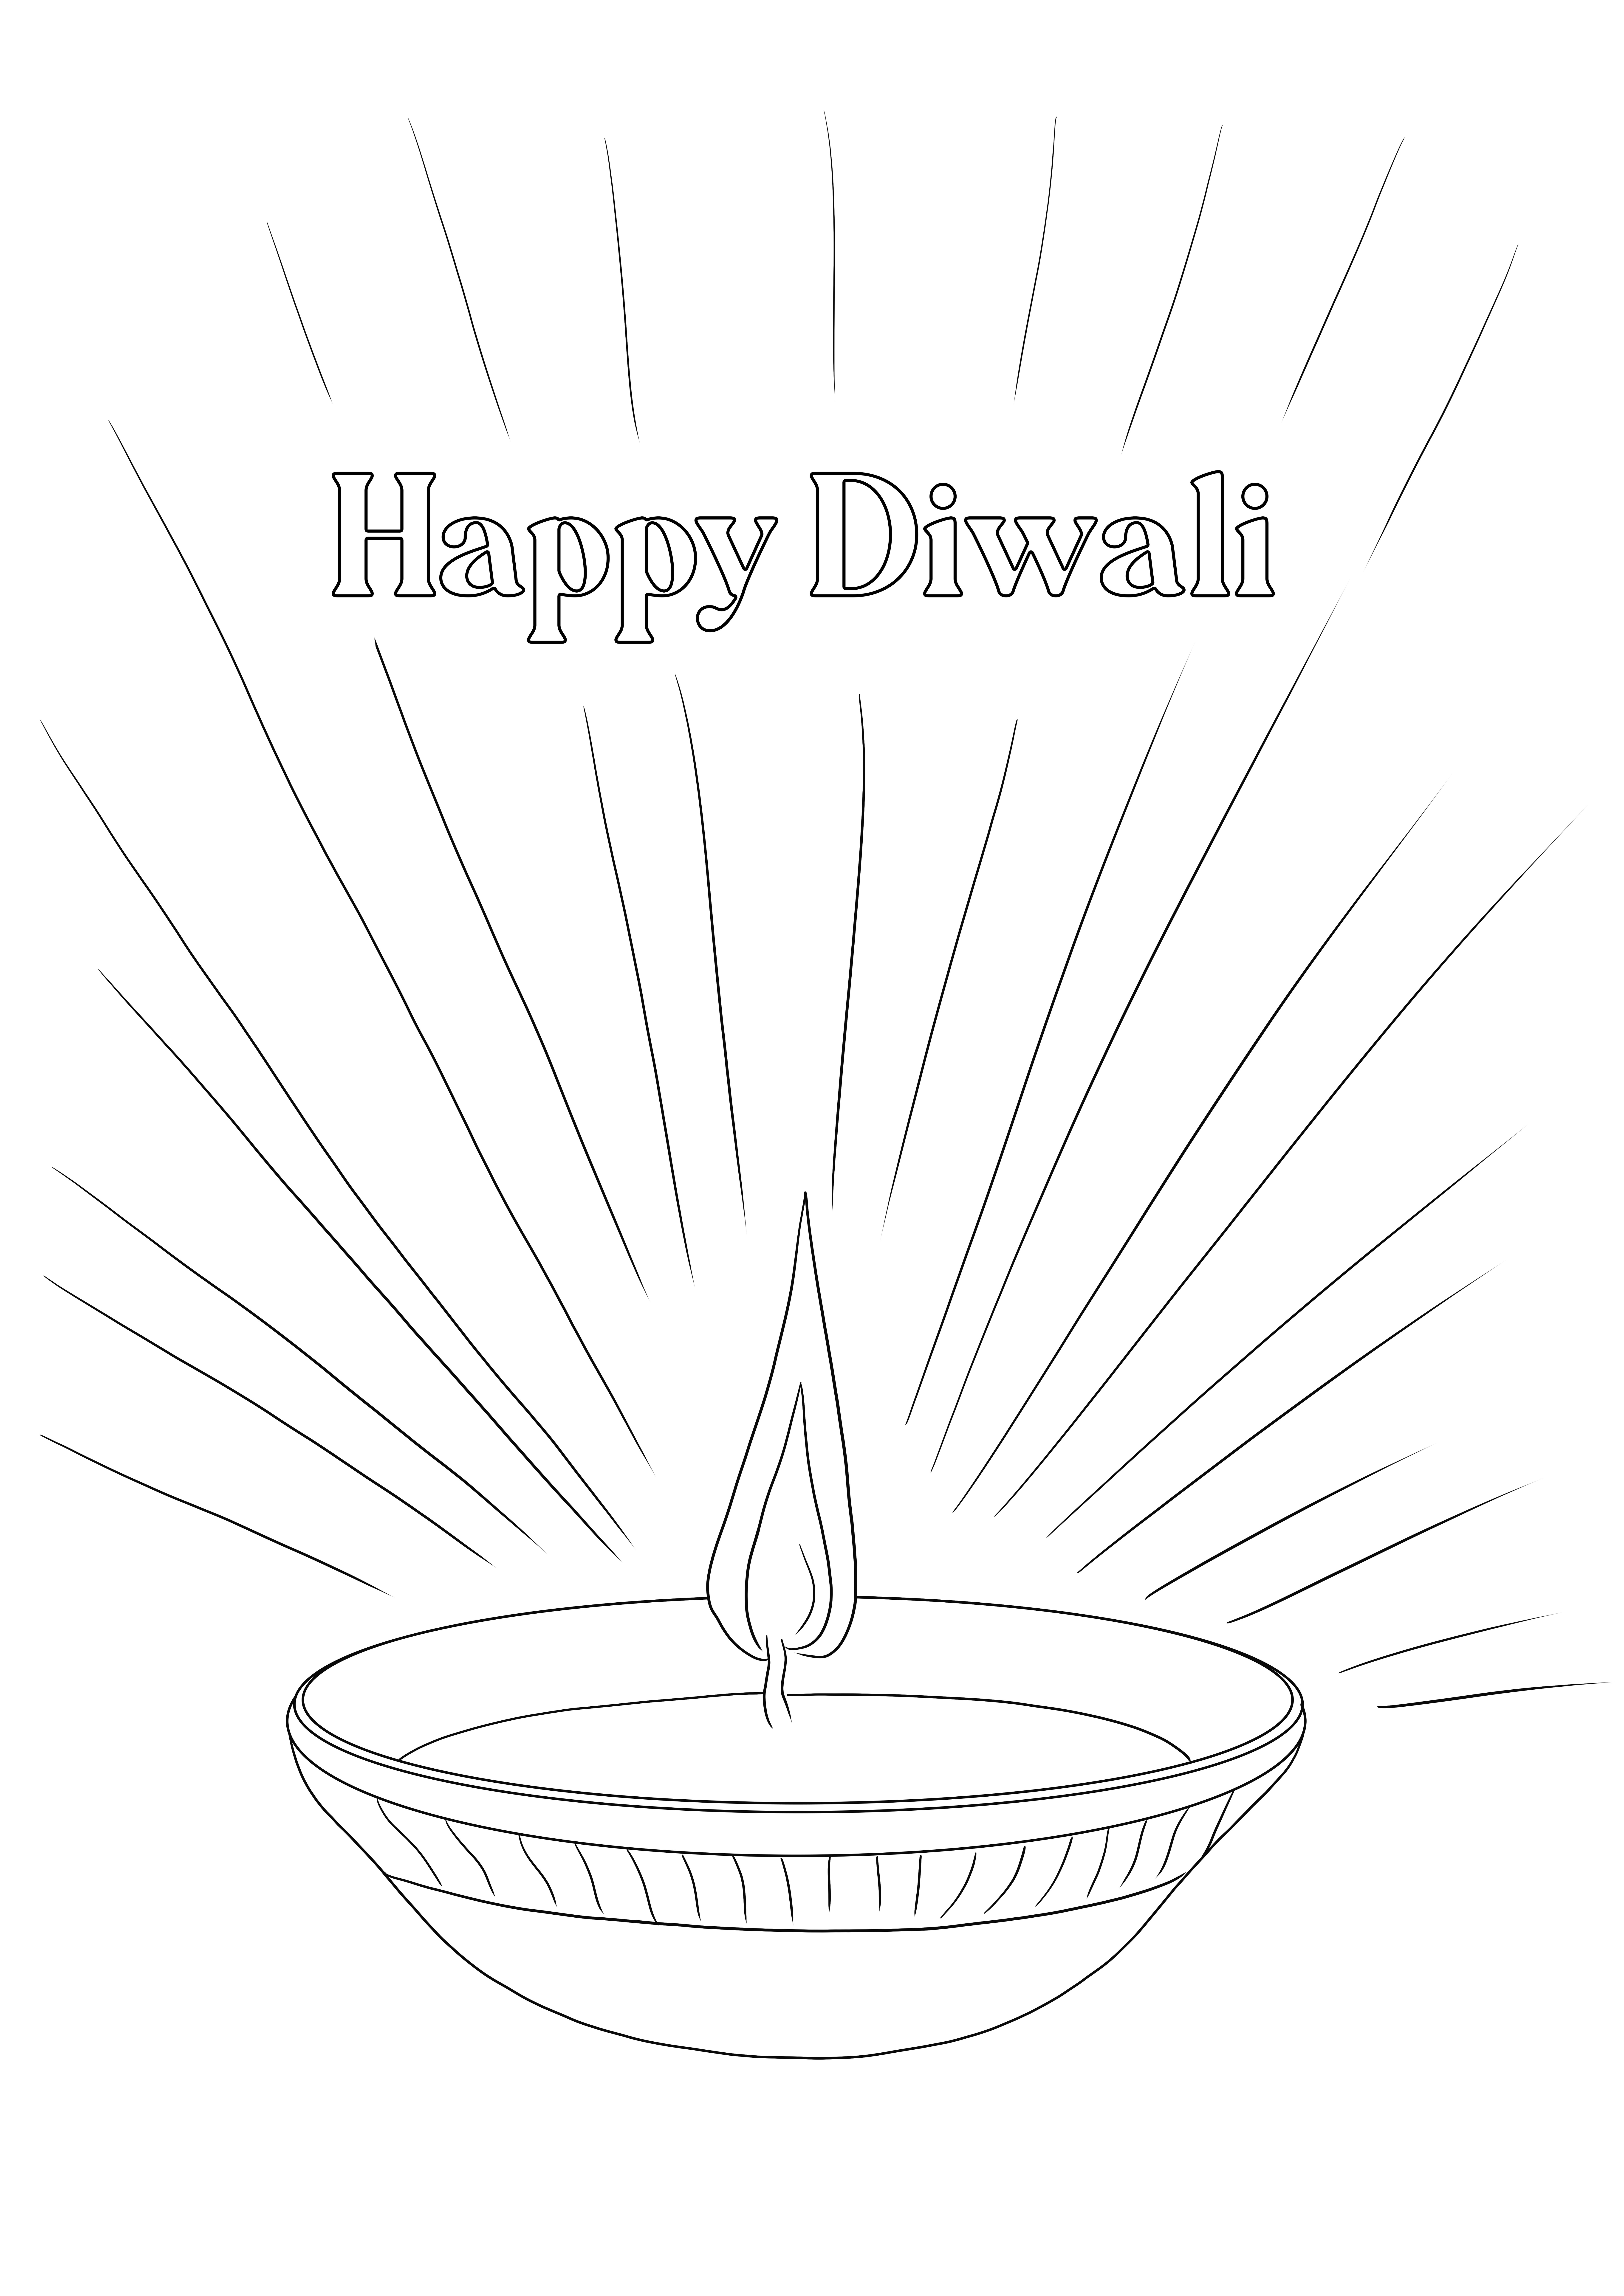 Diwali Diya para colorear e imprimir gratis para niños de todas las edades